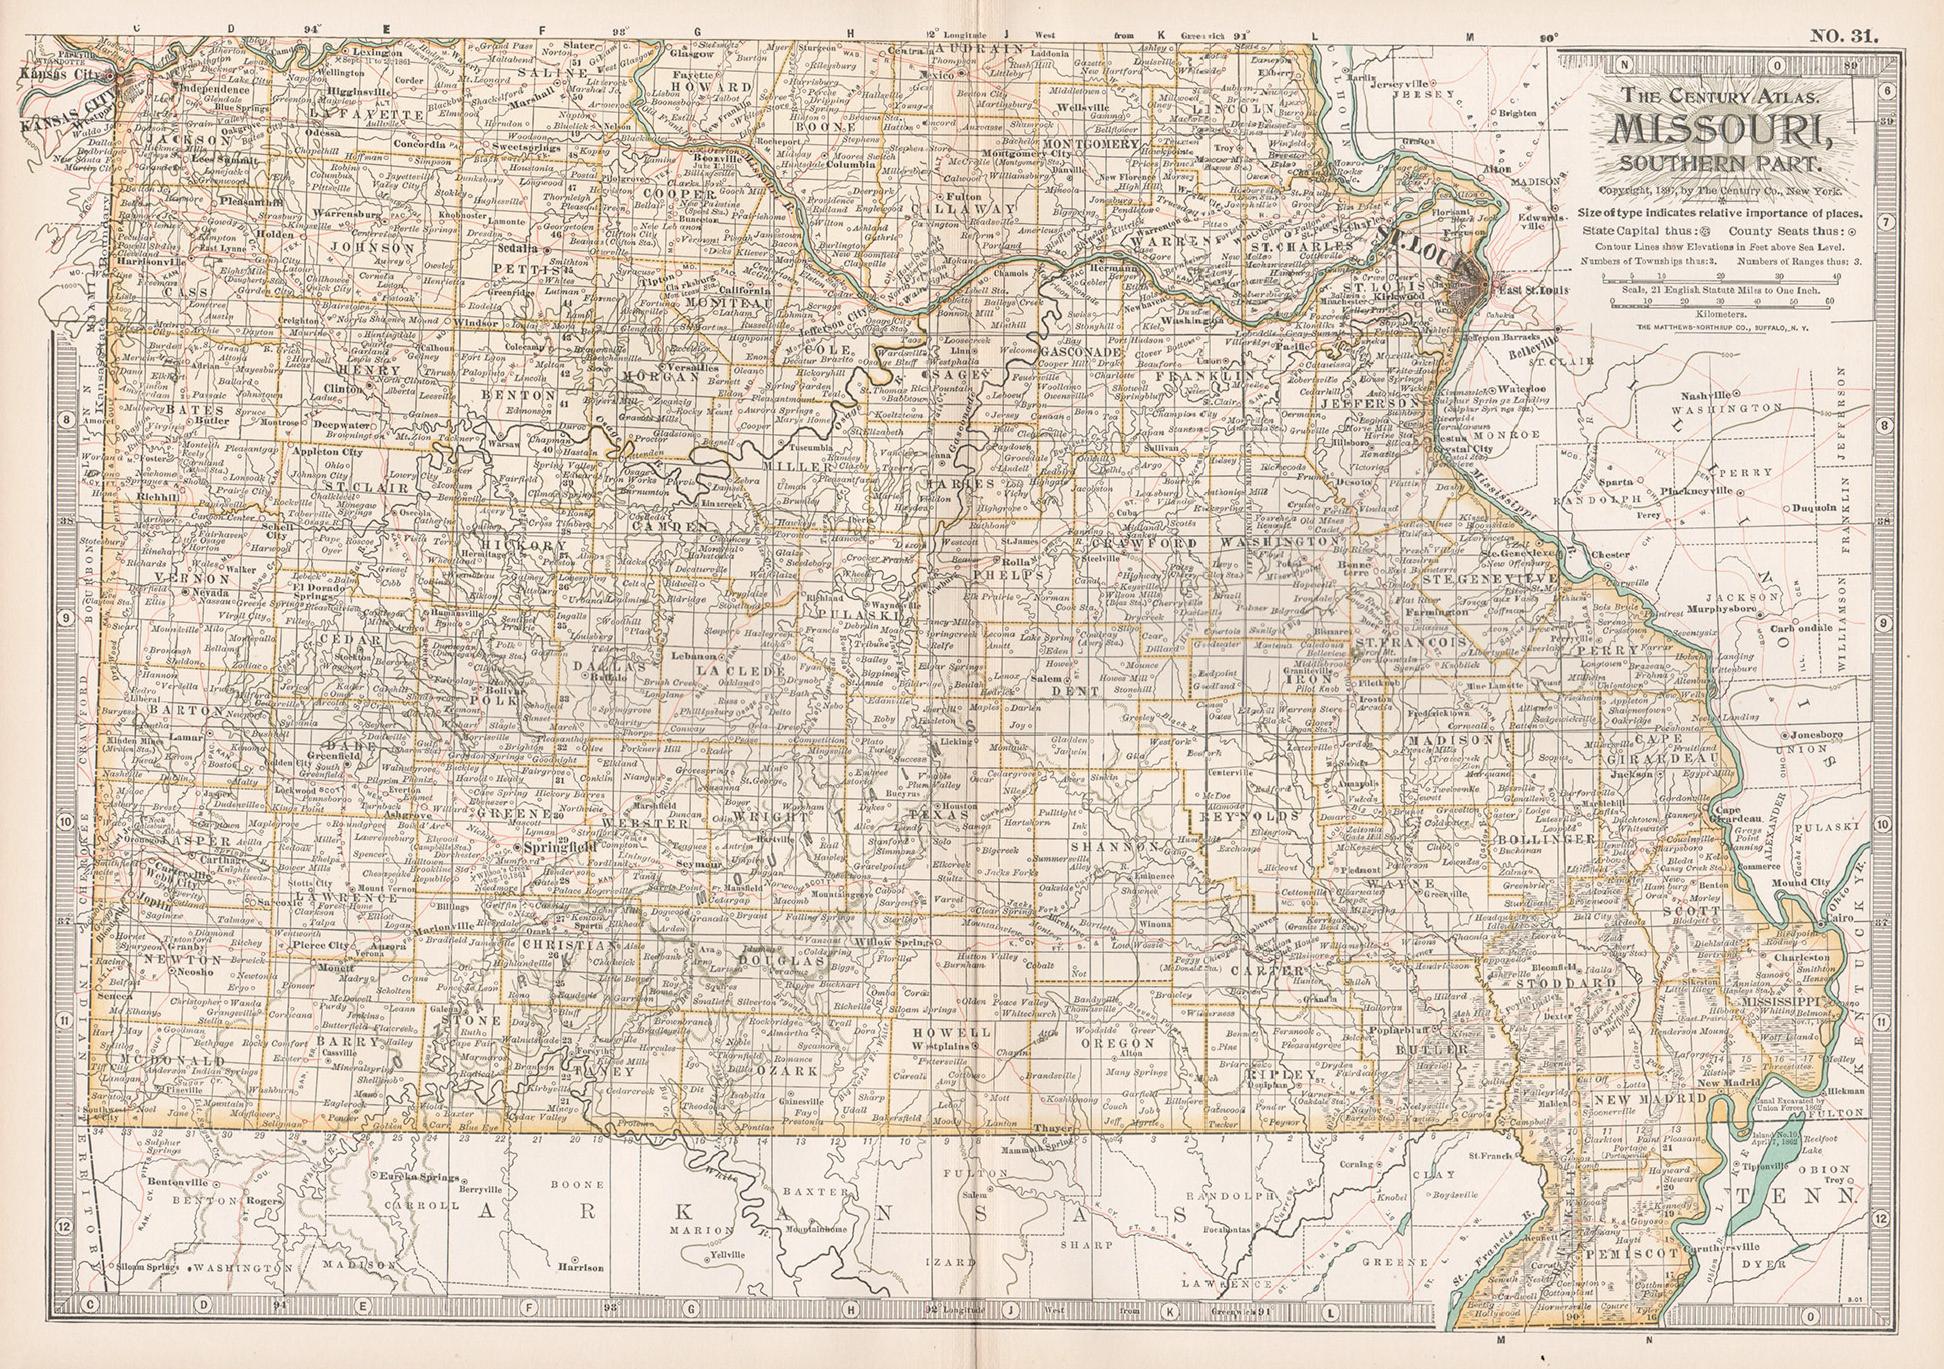 Missouri. Southern Part. USA. Century Atlas state antique vintage map